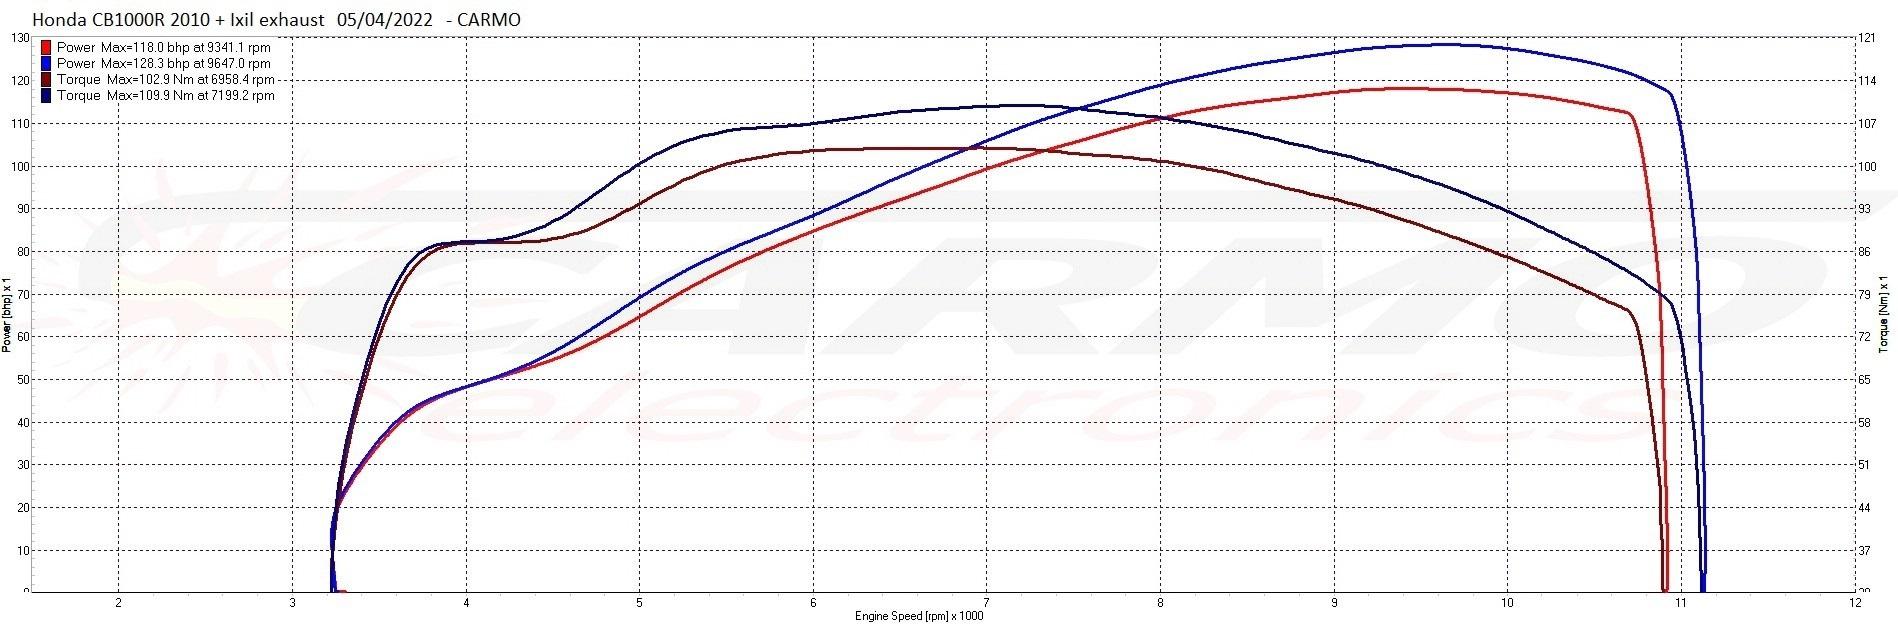 Honda CB1000R ECU flash more power tuning mapping faster